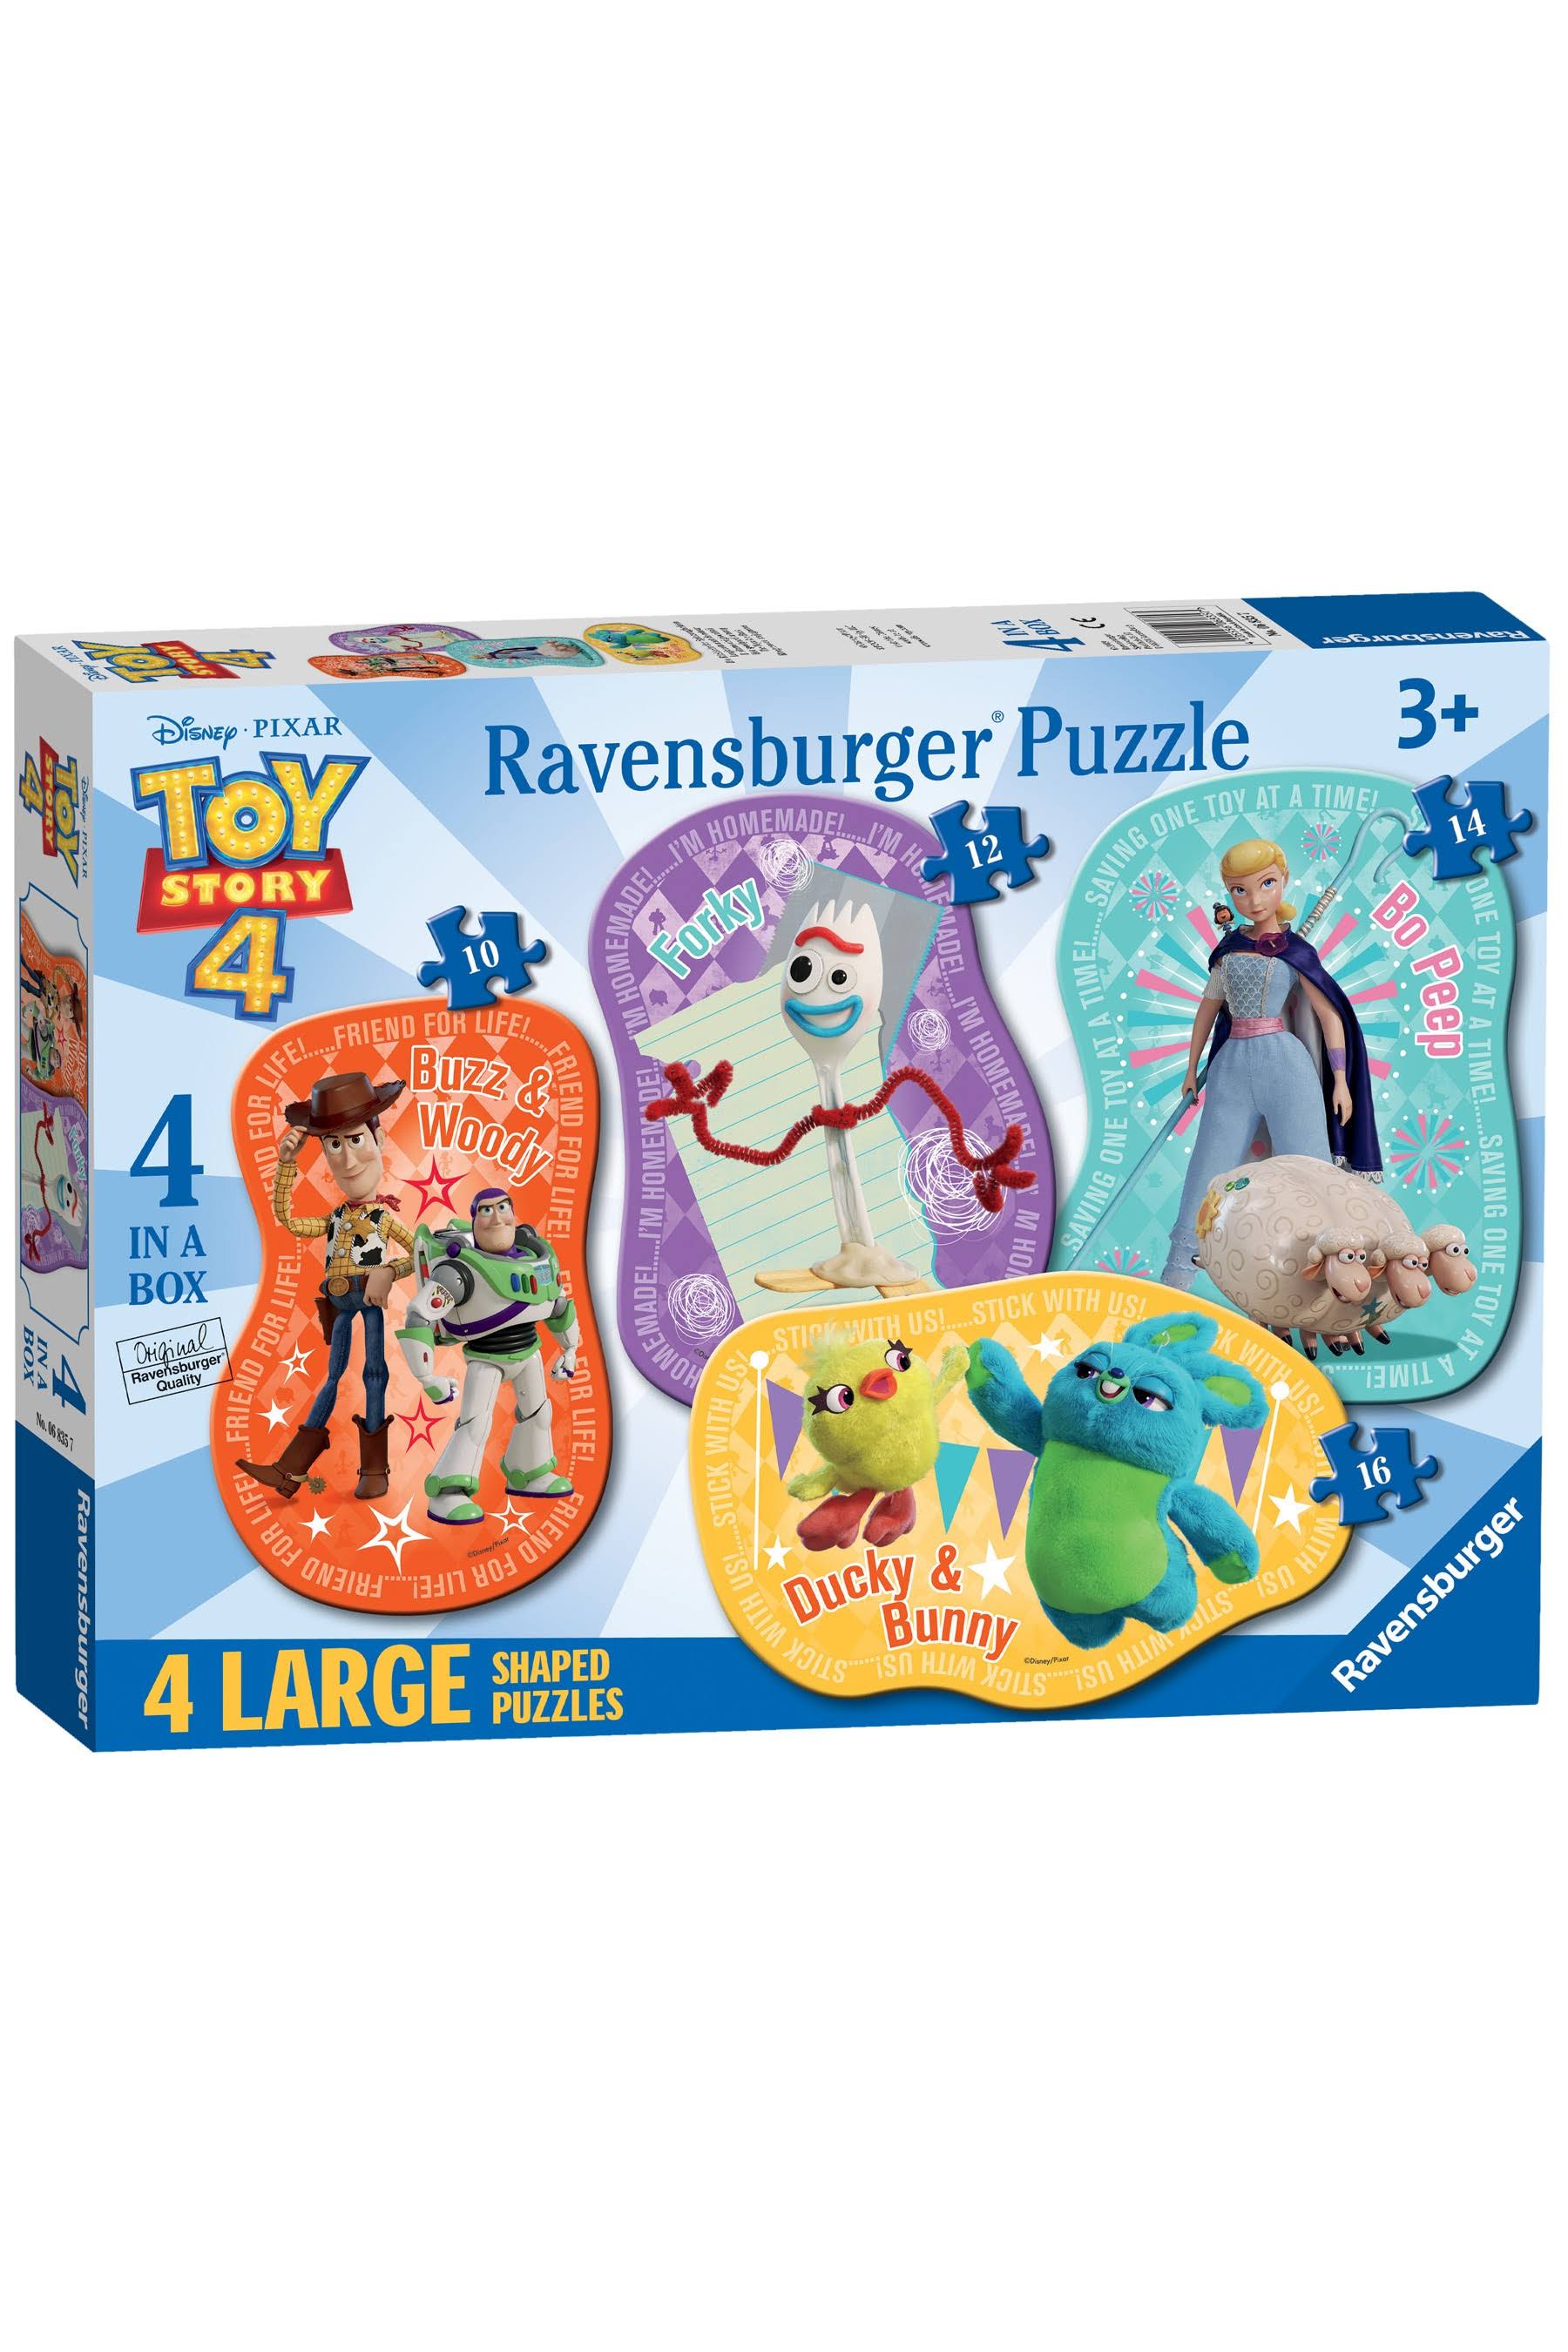 Ravensburger Disney Toy Story 4 Large Shaped Jigsaw Puzzle Sets - Pack of 4